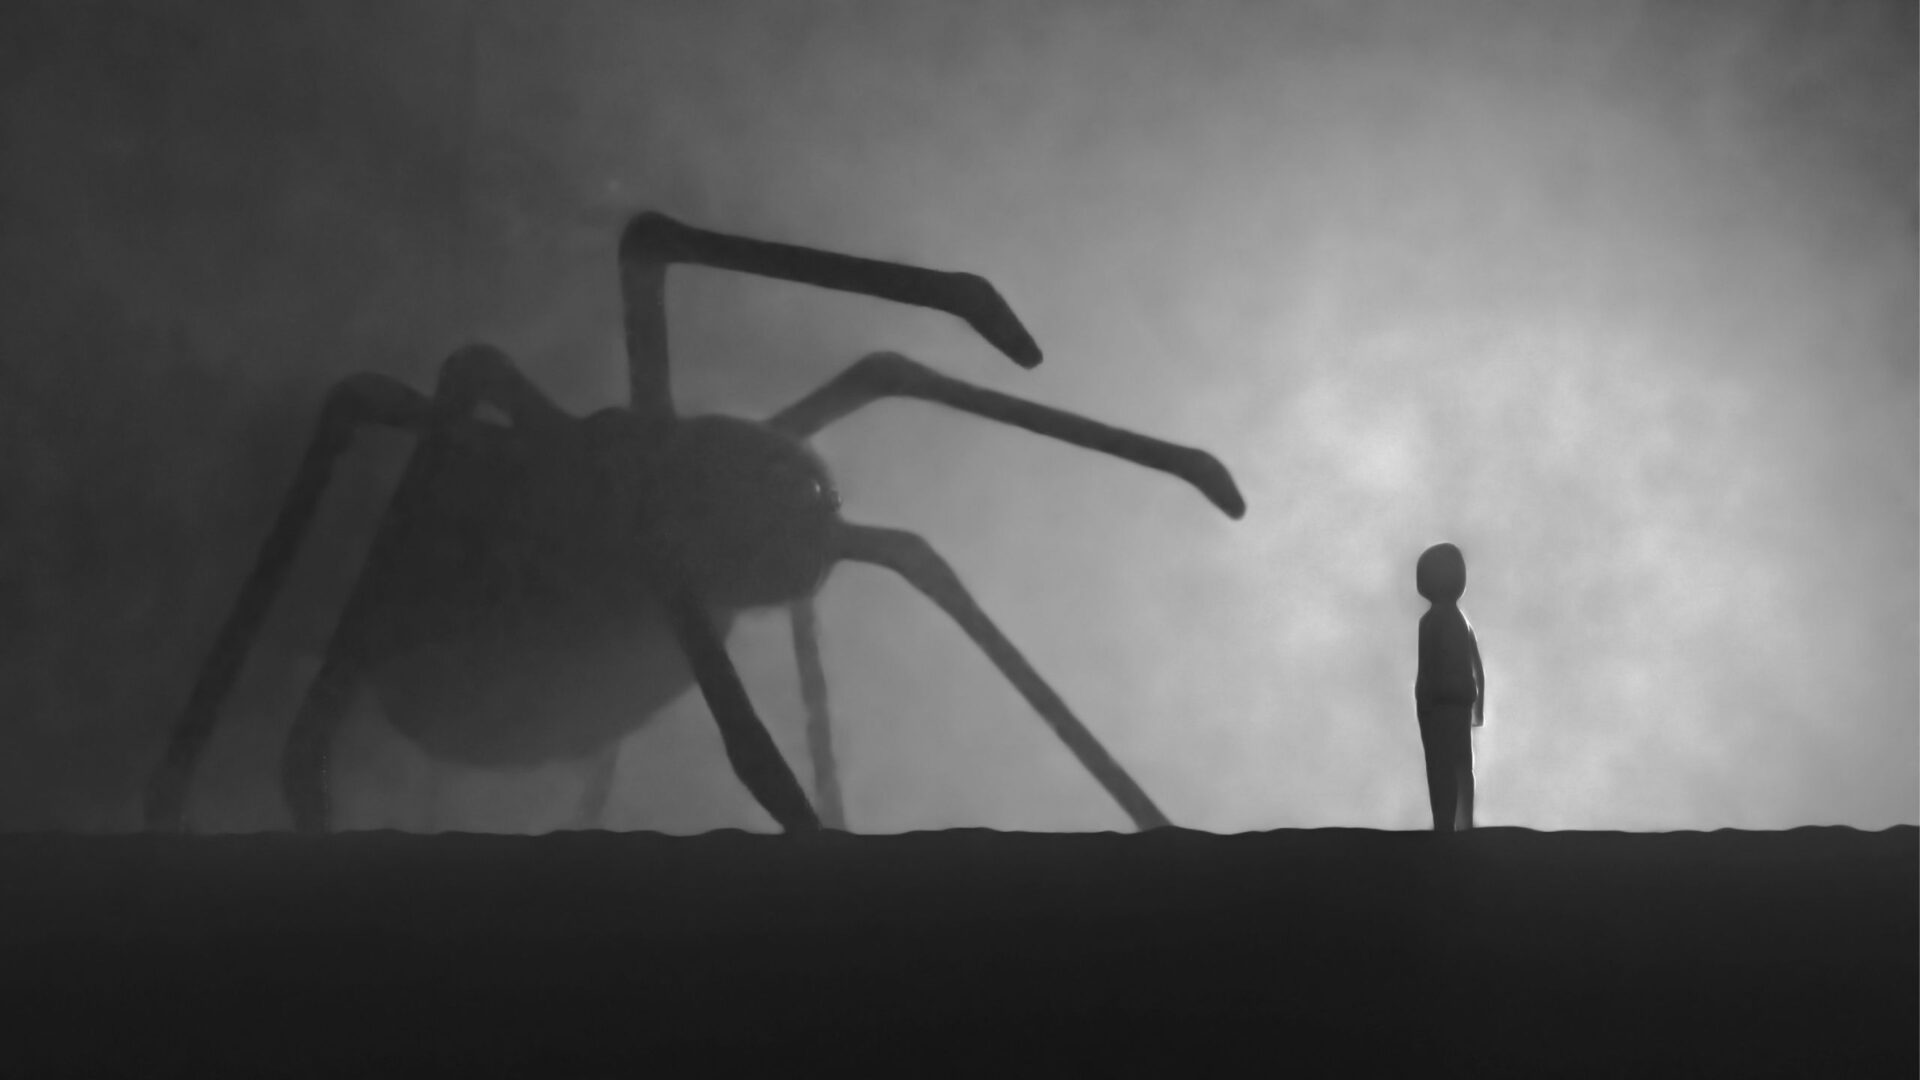 psychologyzine - arachnofobia, a fear of spiders